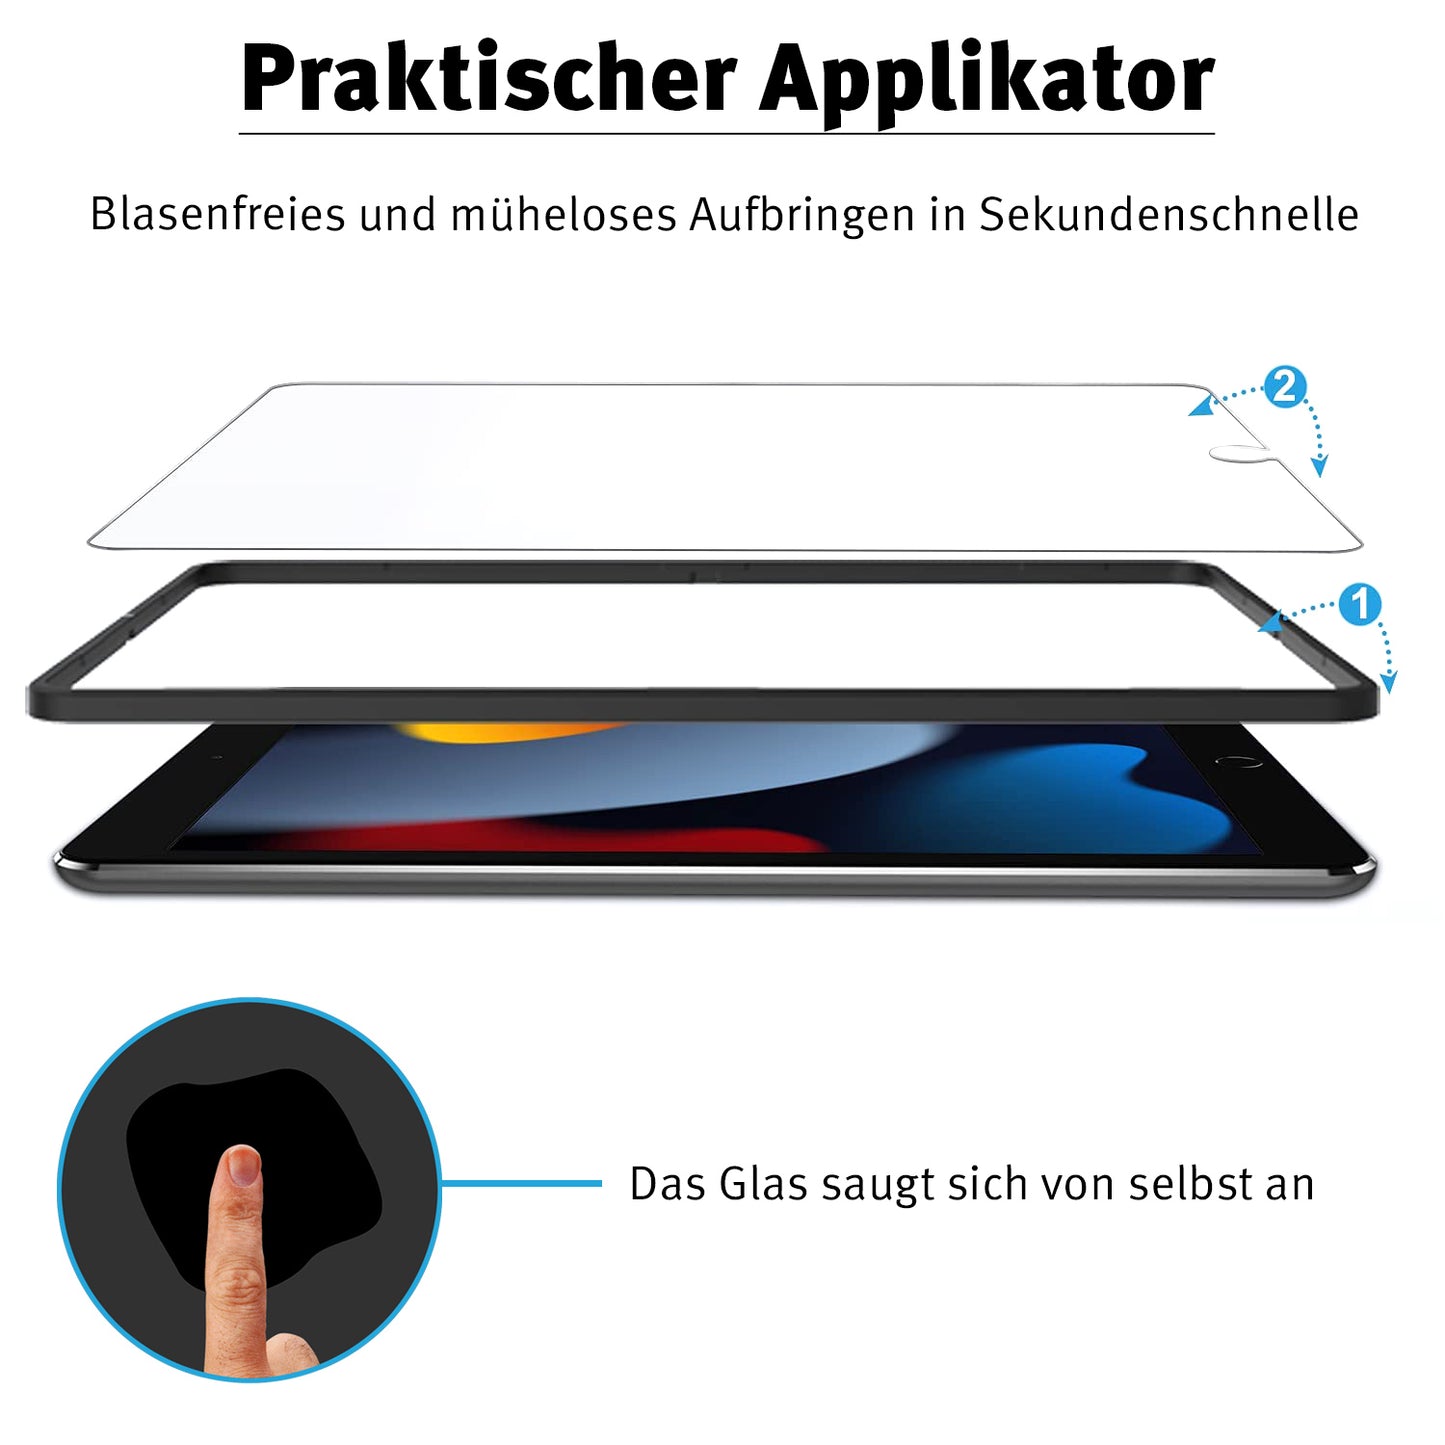 arktis PaperFeel iPad Pro 12,9“ (2018-2020-2021-2022) PREMIUM Schutzglas